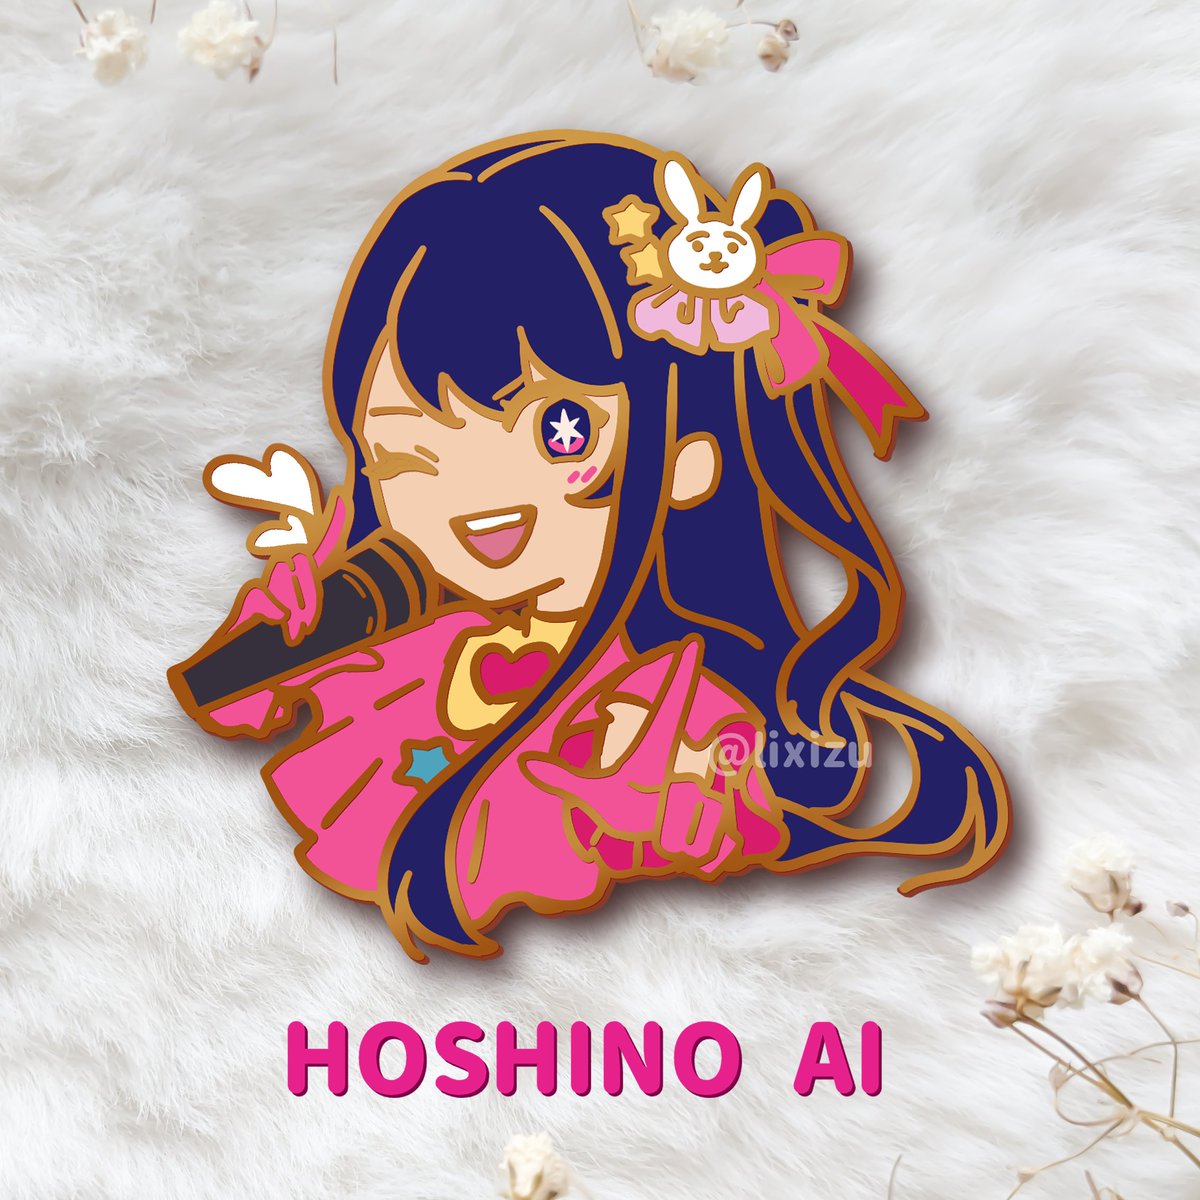 【RT's help me a lot!】 My Hoshino Ai pin is available on my site now! #OSHINOKO #hoshinoai